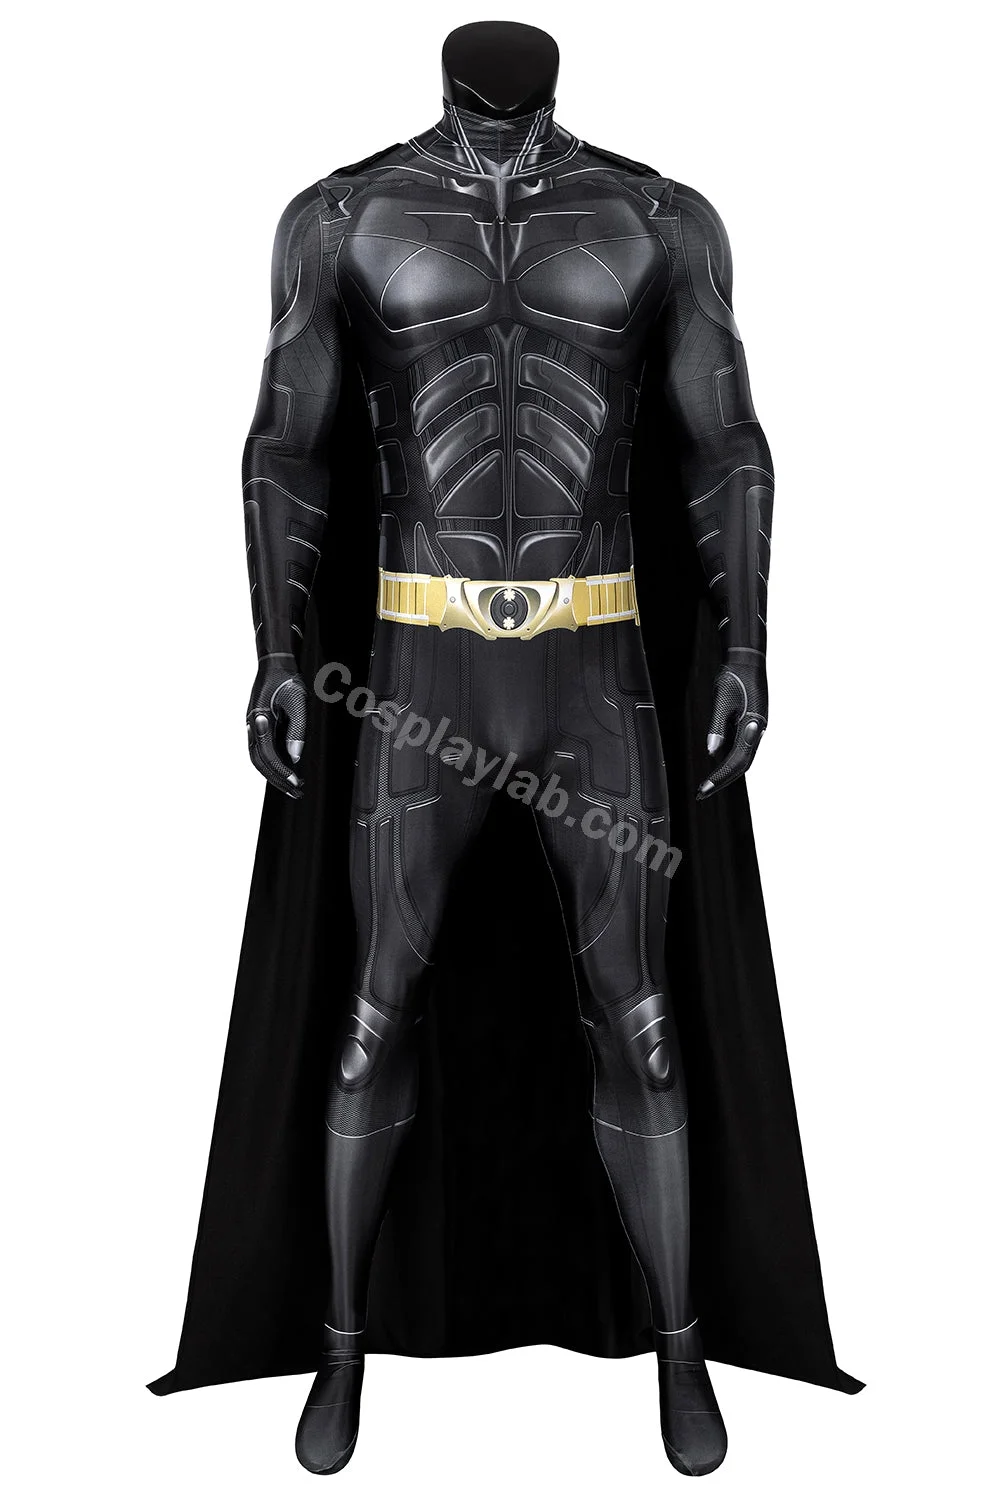 Batman Cosplay Costume Dark Knight Rises Batsuit Spandex Edition By CosplayLab